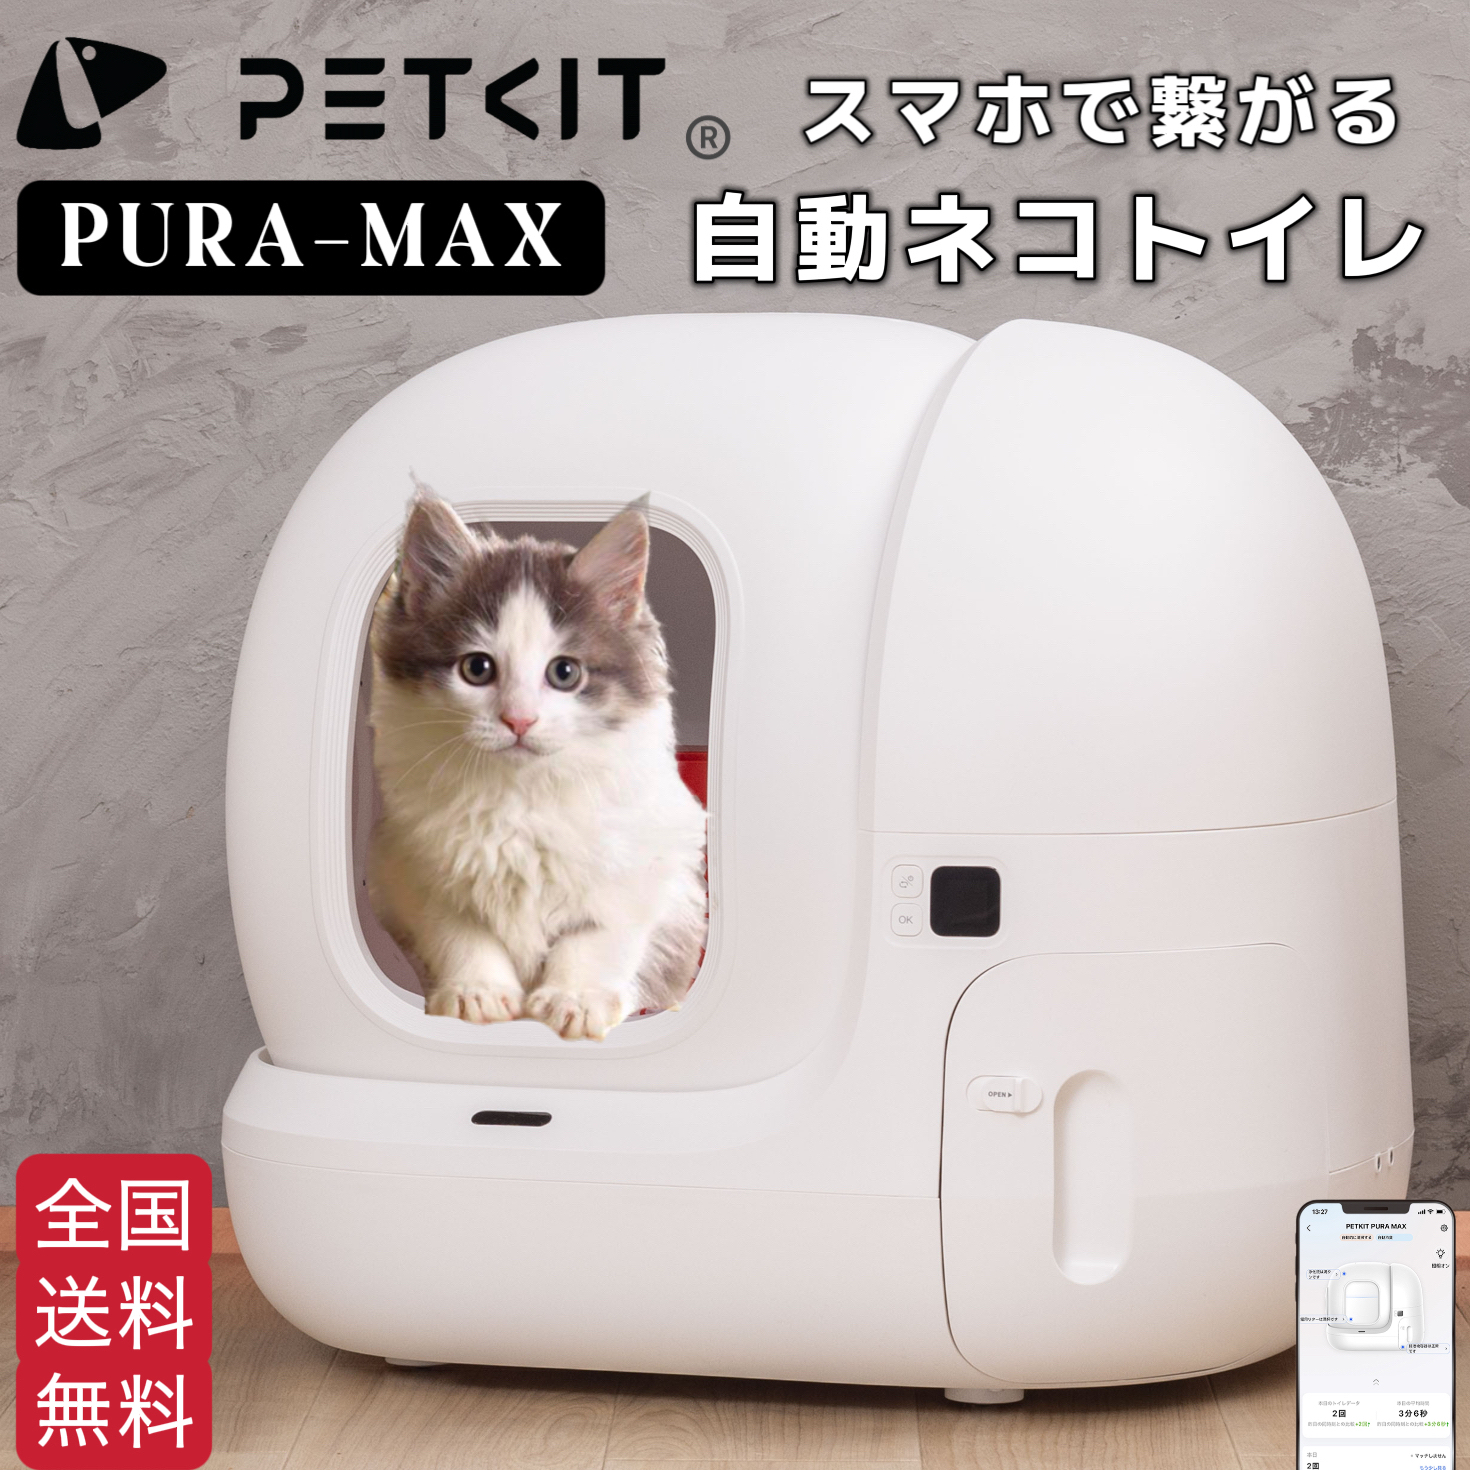 【PETKIT-PURA-MAX (高級版) 】自動猫用トイレ ペットキット 自動ネコトイレ【正規品】【安心1年保証】